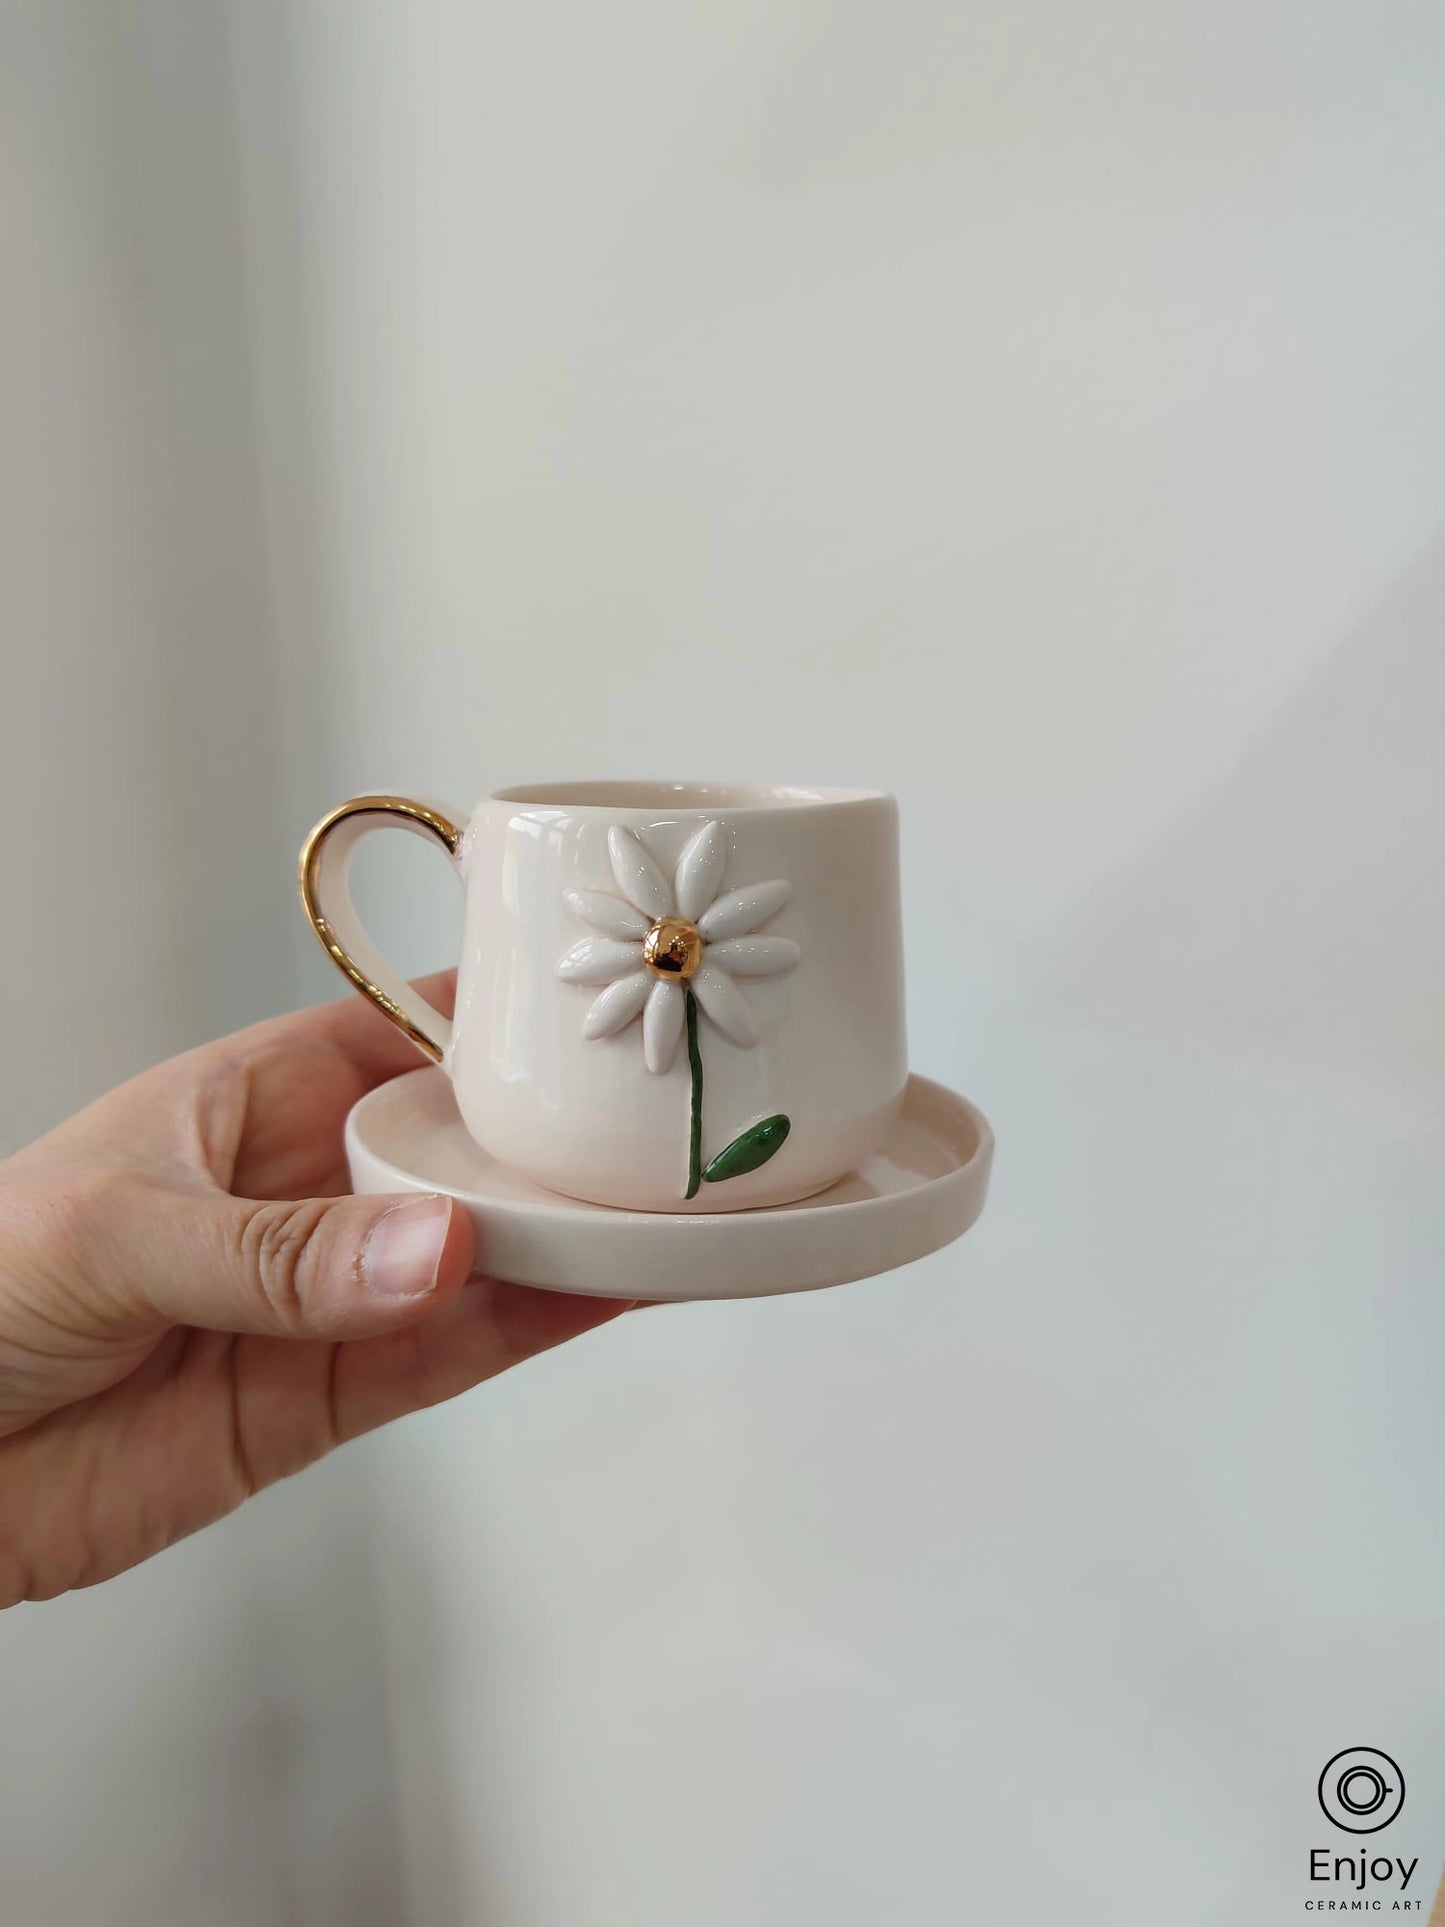 Daisy Delight: Handmade Ceramic Daisy Espresso Cup Set with Gold Handle & Saucer, 5.4 oz - Ideal Daisy Gift Set